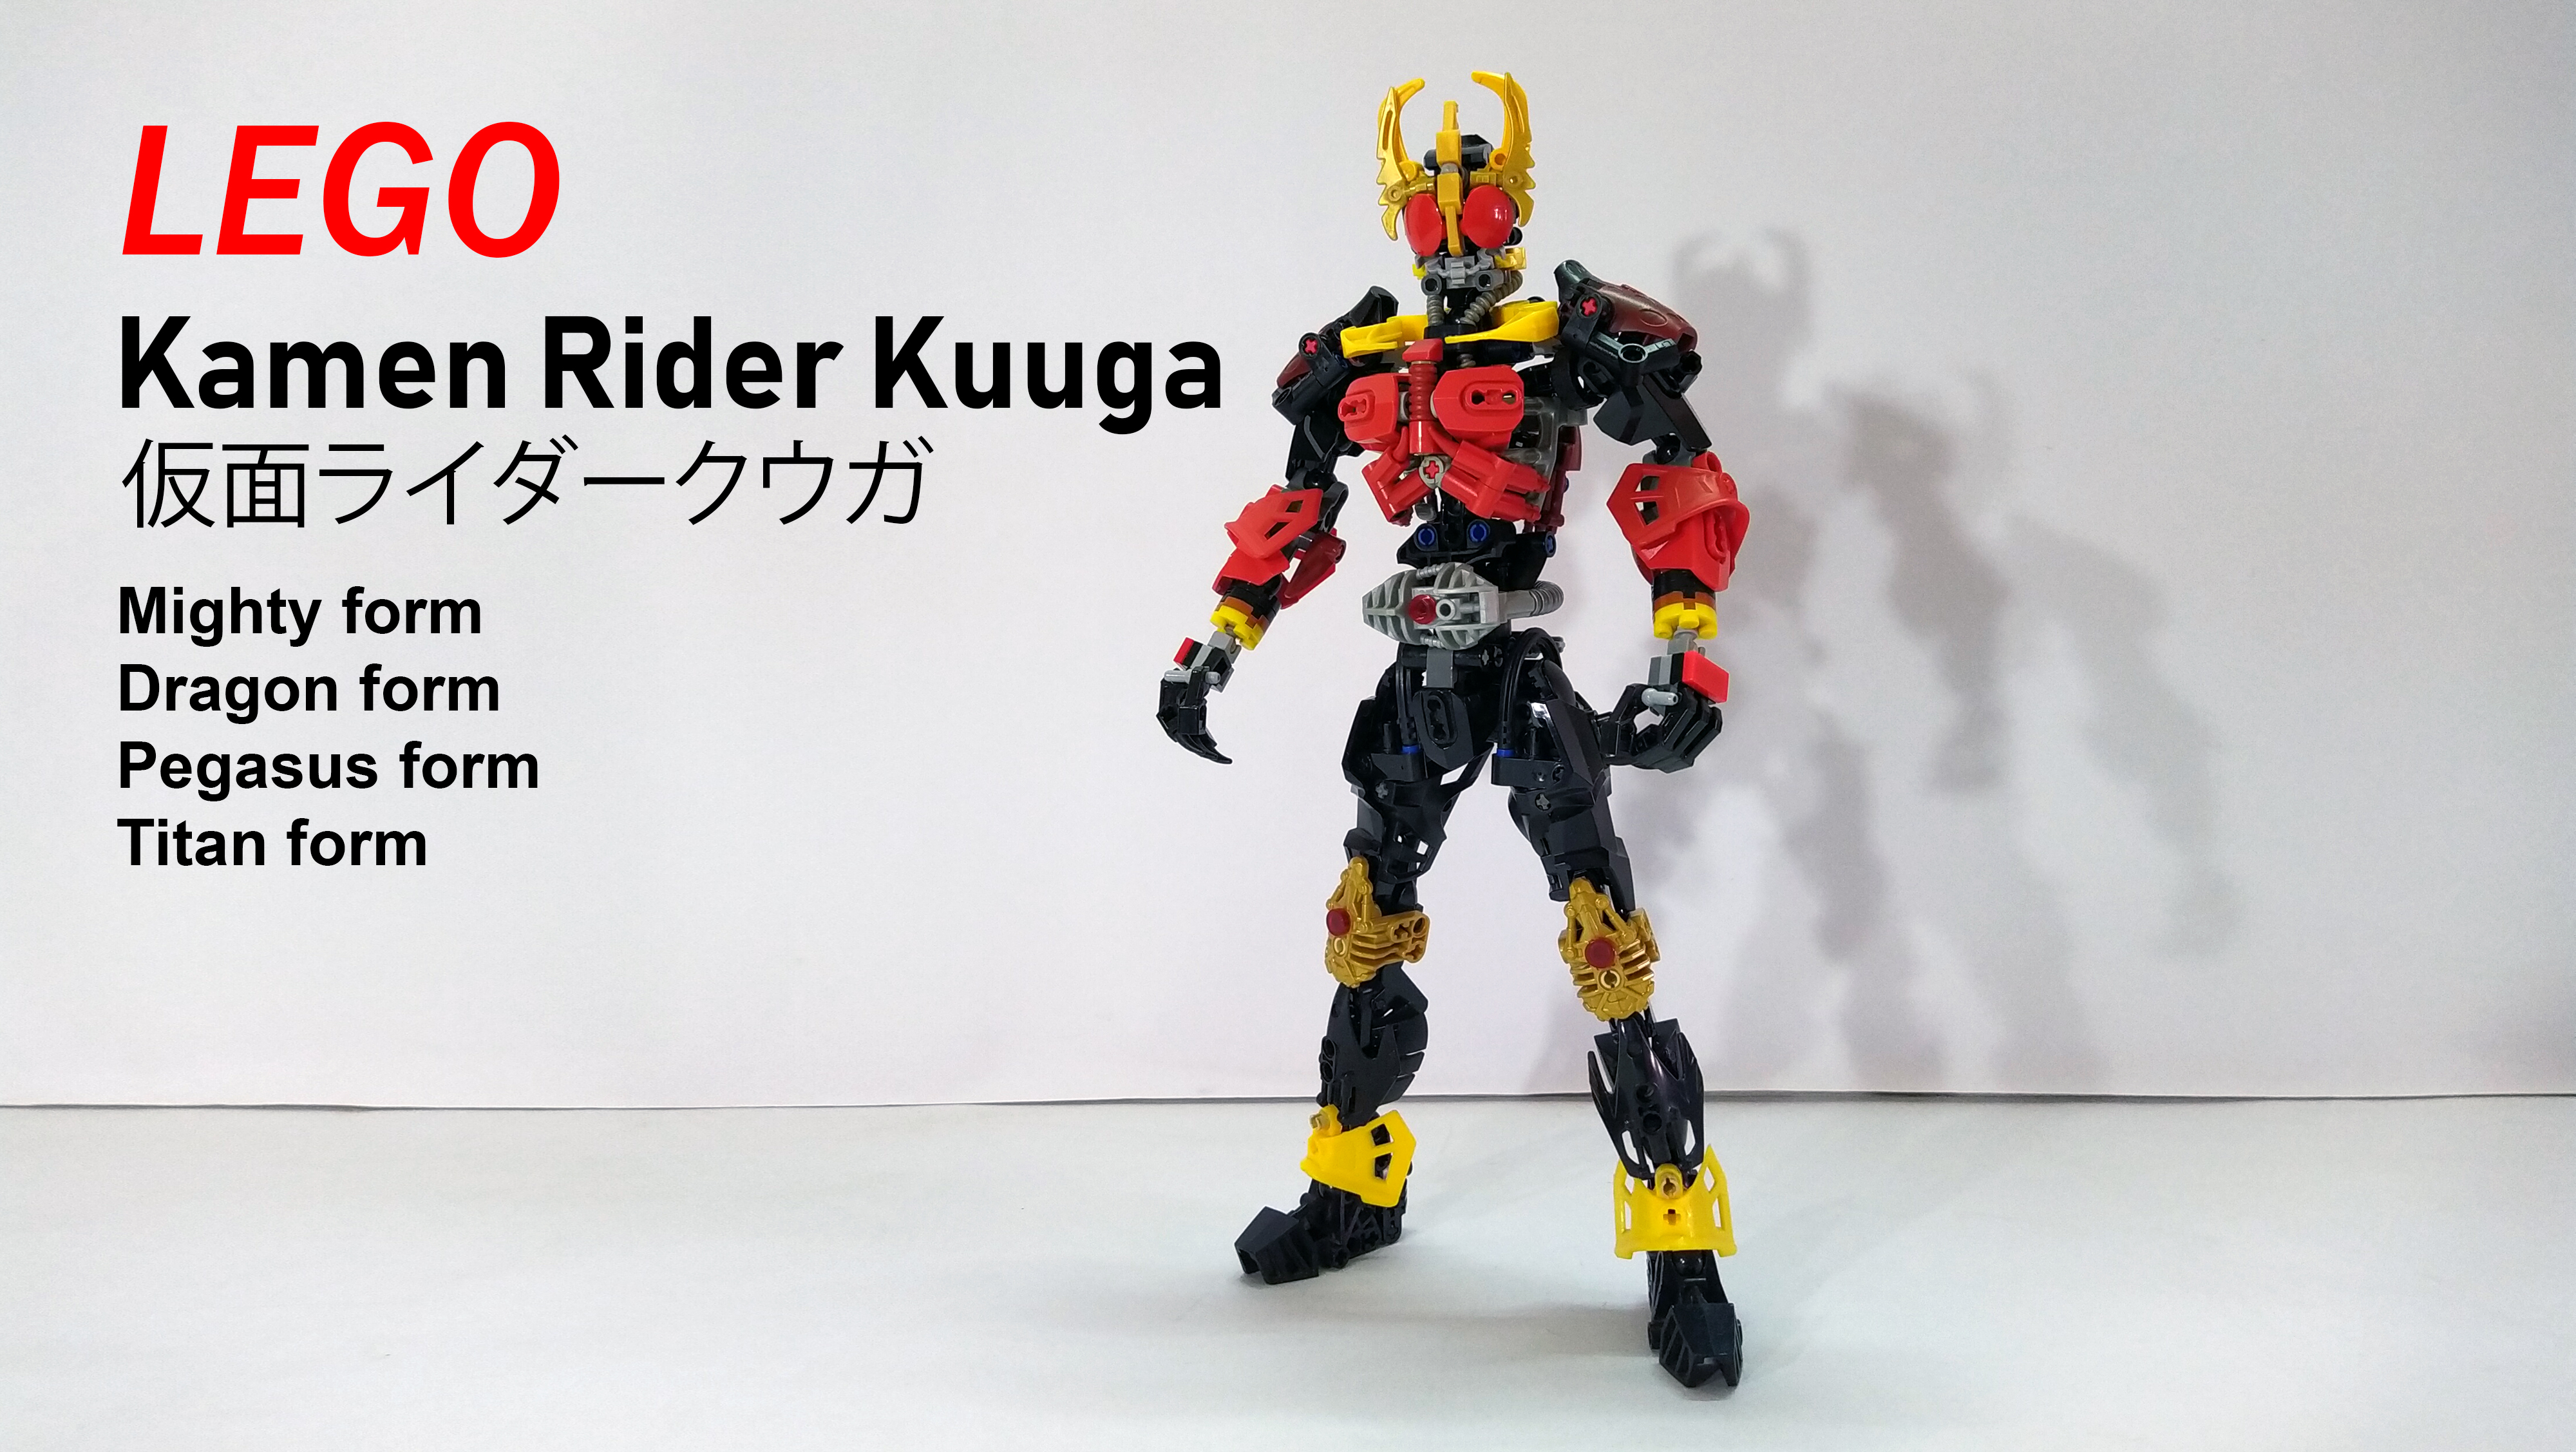 LEGO Kamen Rider Kuuga by demon14082000 on DeviantArt